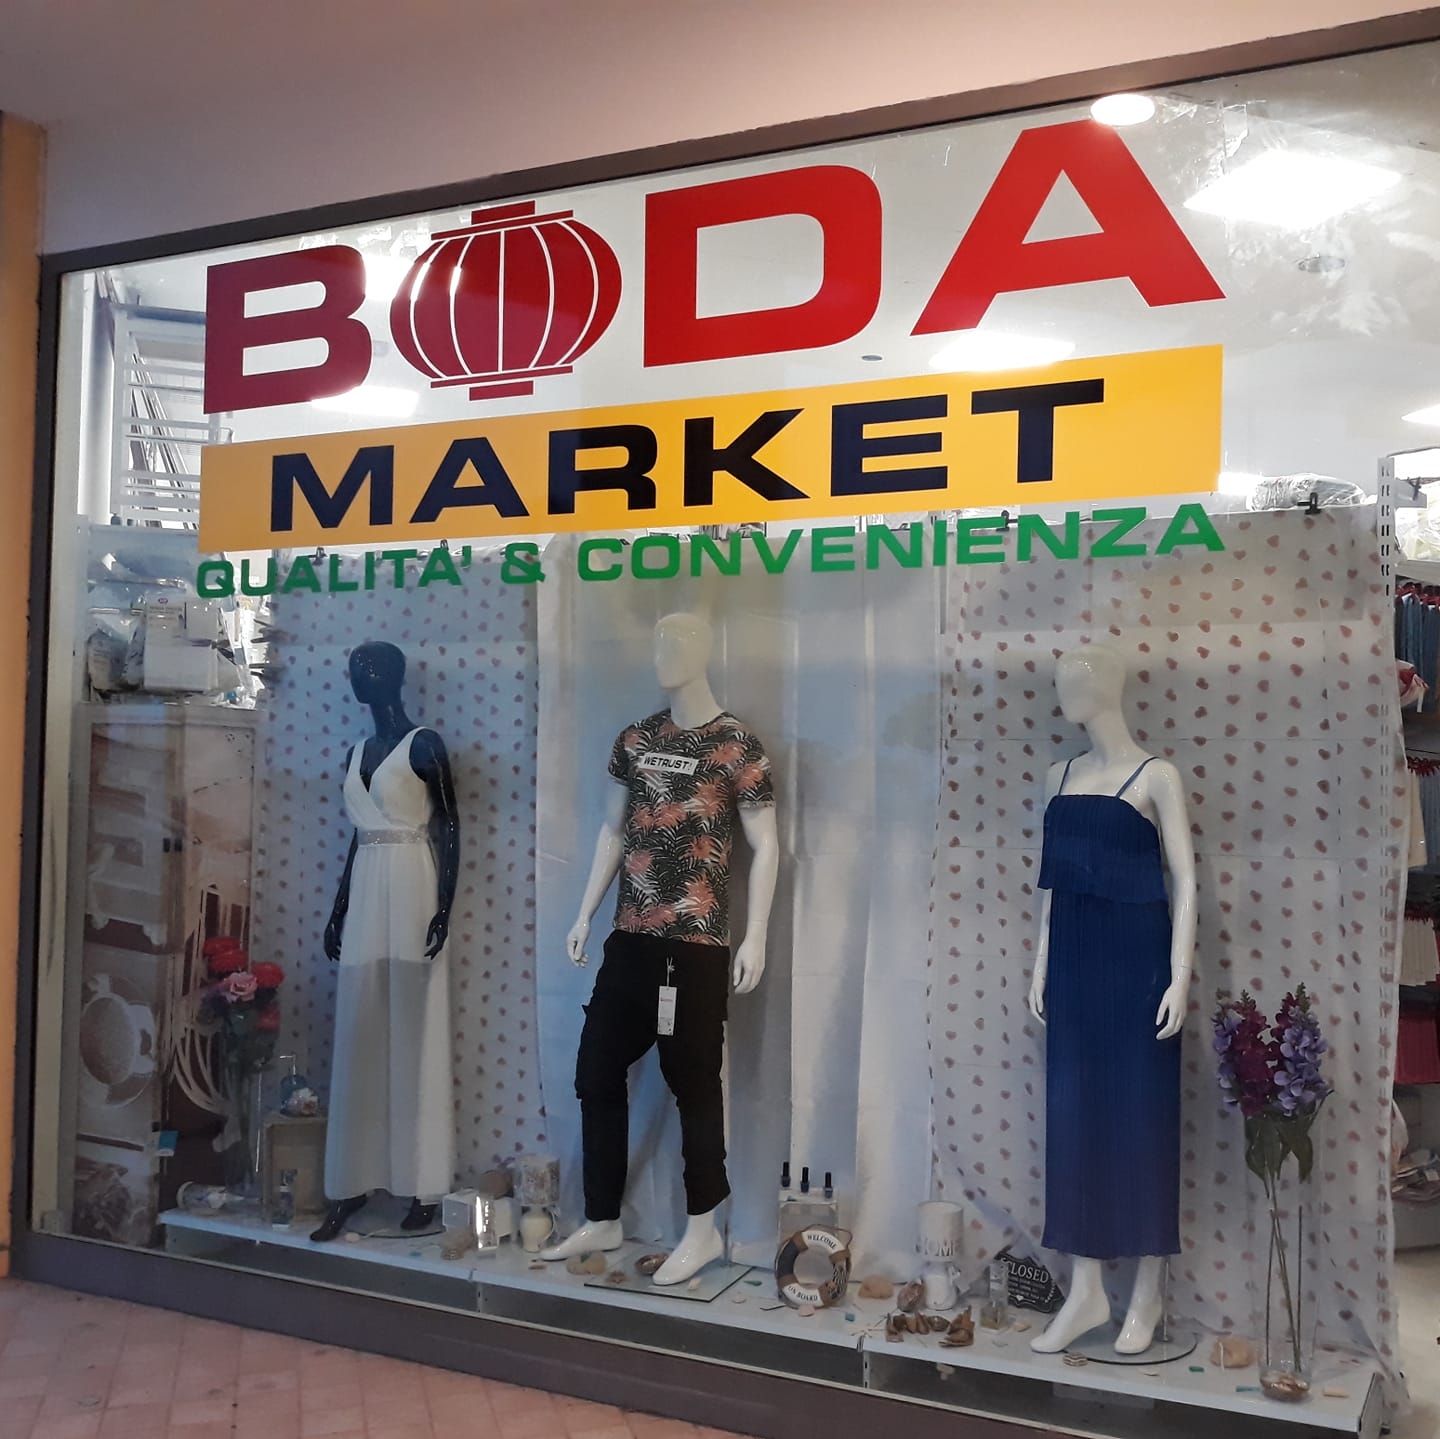 Boda Market